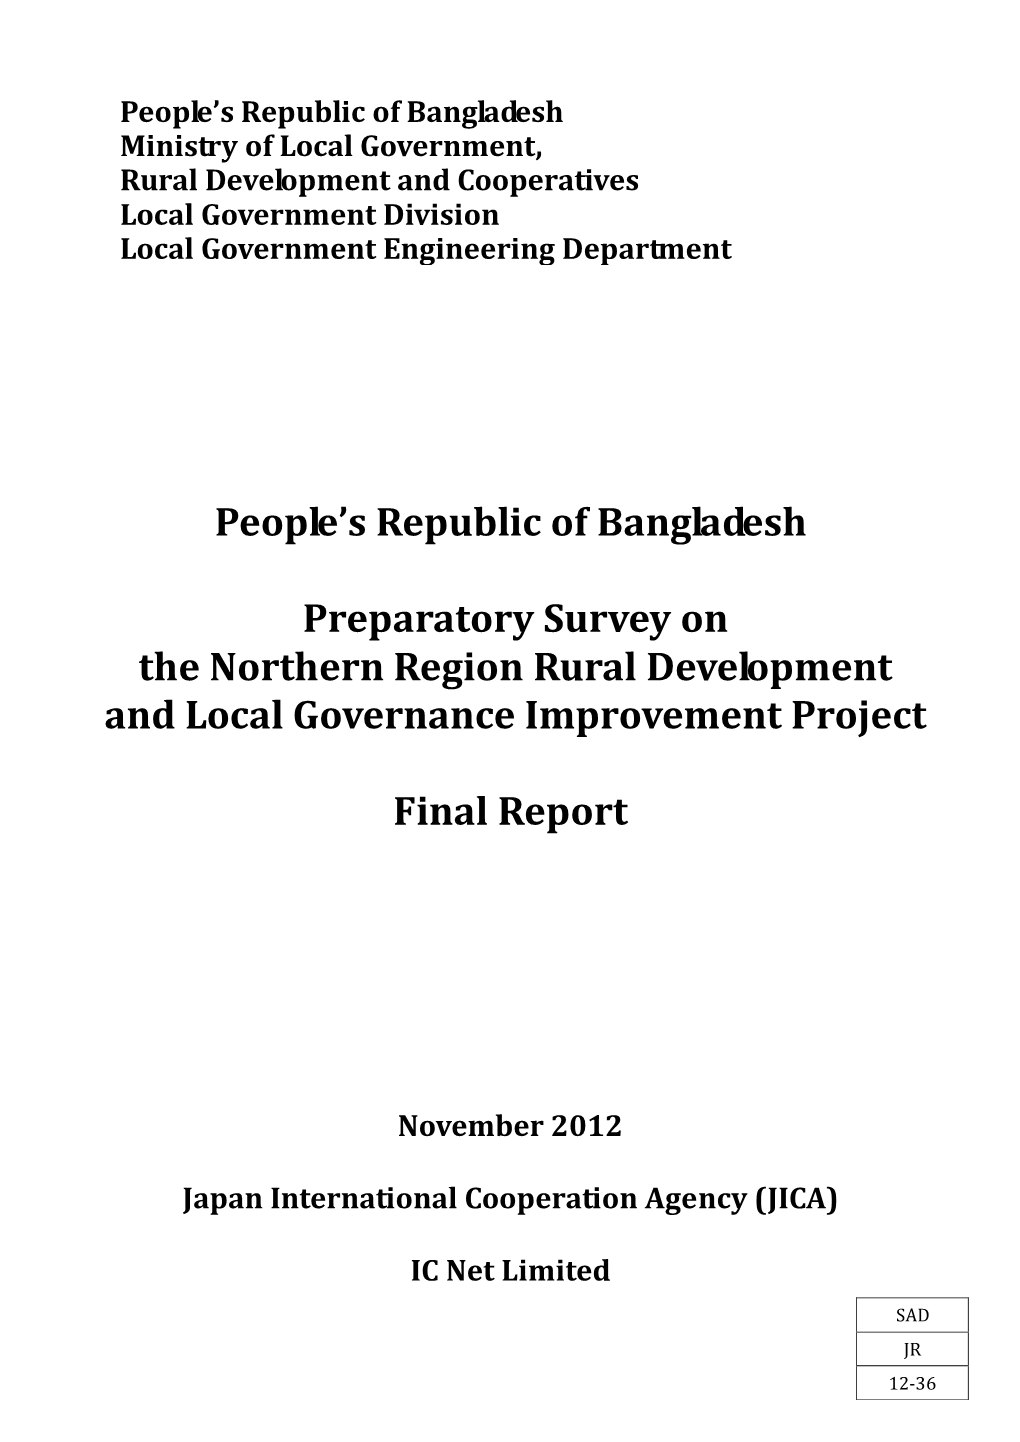 People's Republic of Bangladesh Preparatory Survey on the Northern